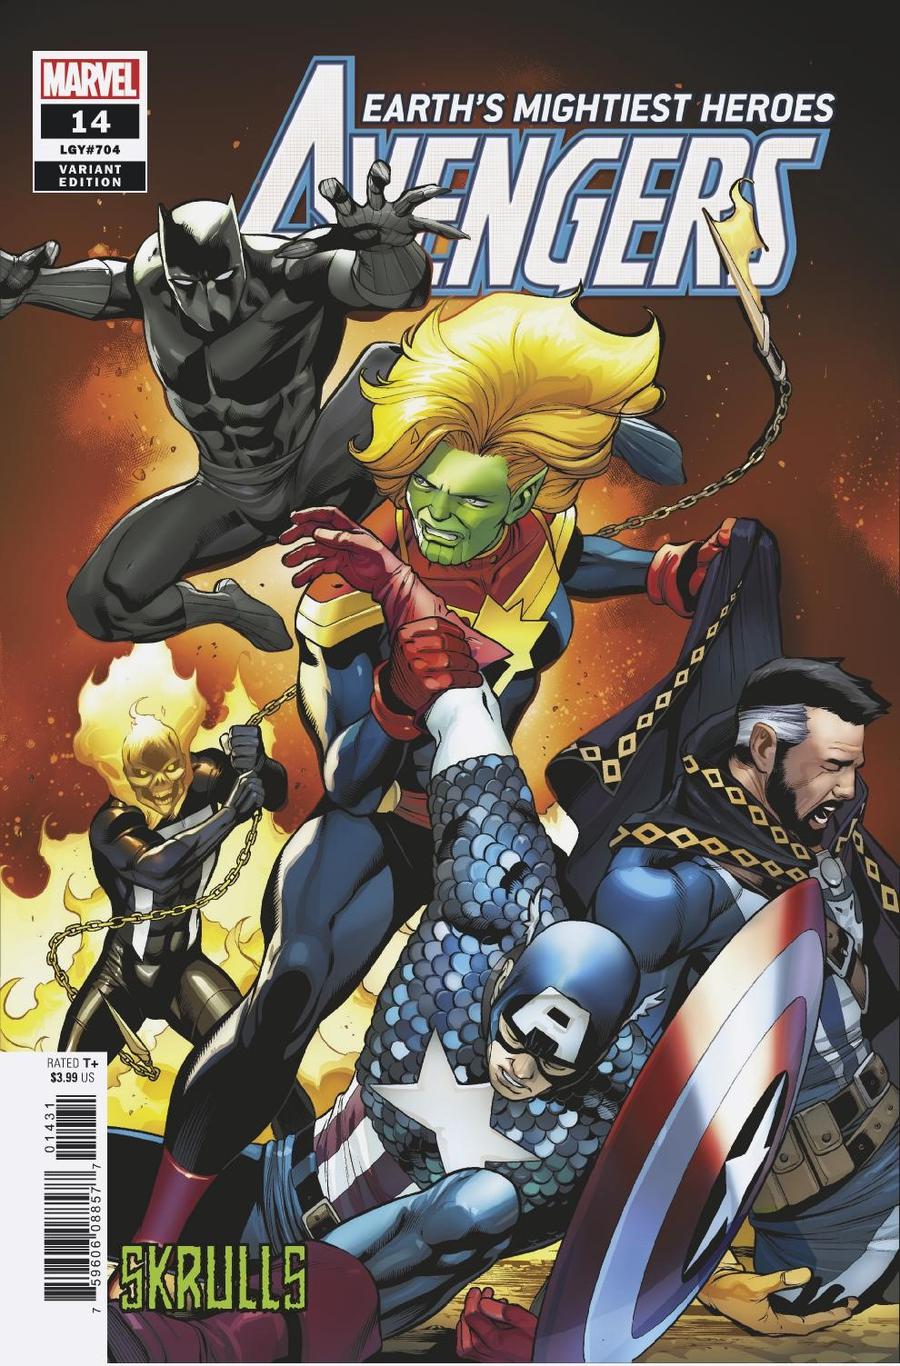 Avengers Vol 7 #14 Cover B Variant Carlos Pacheco Skrulls Cover